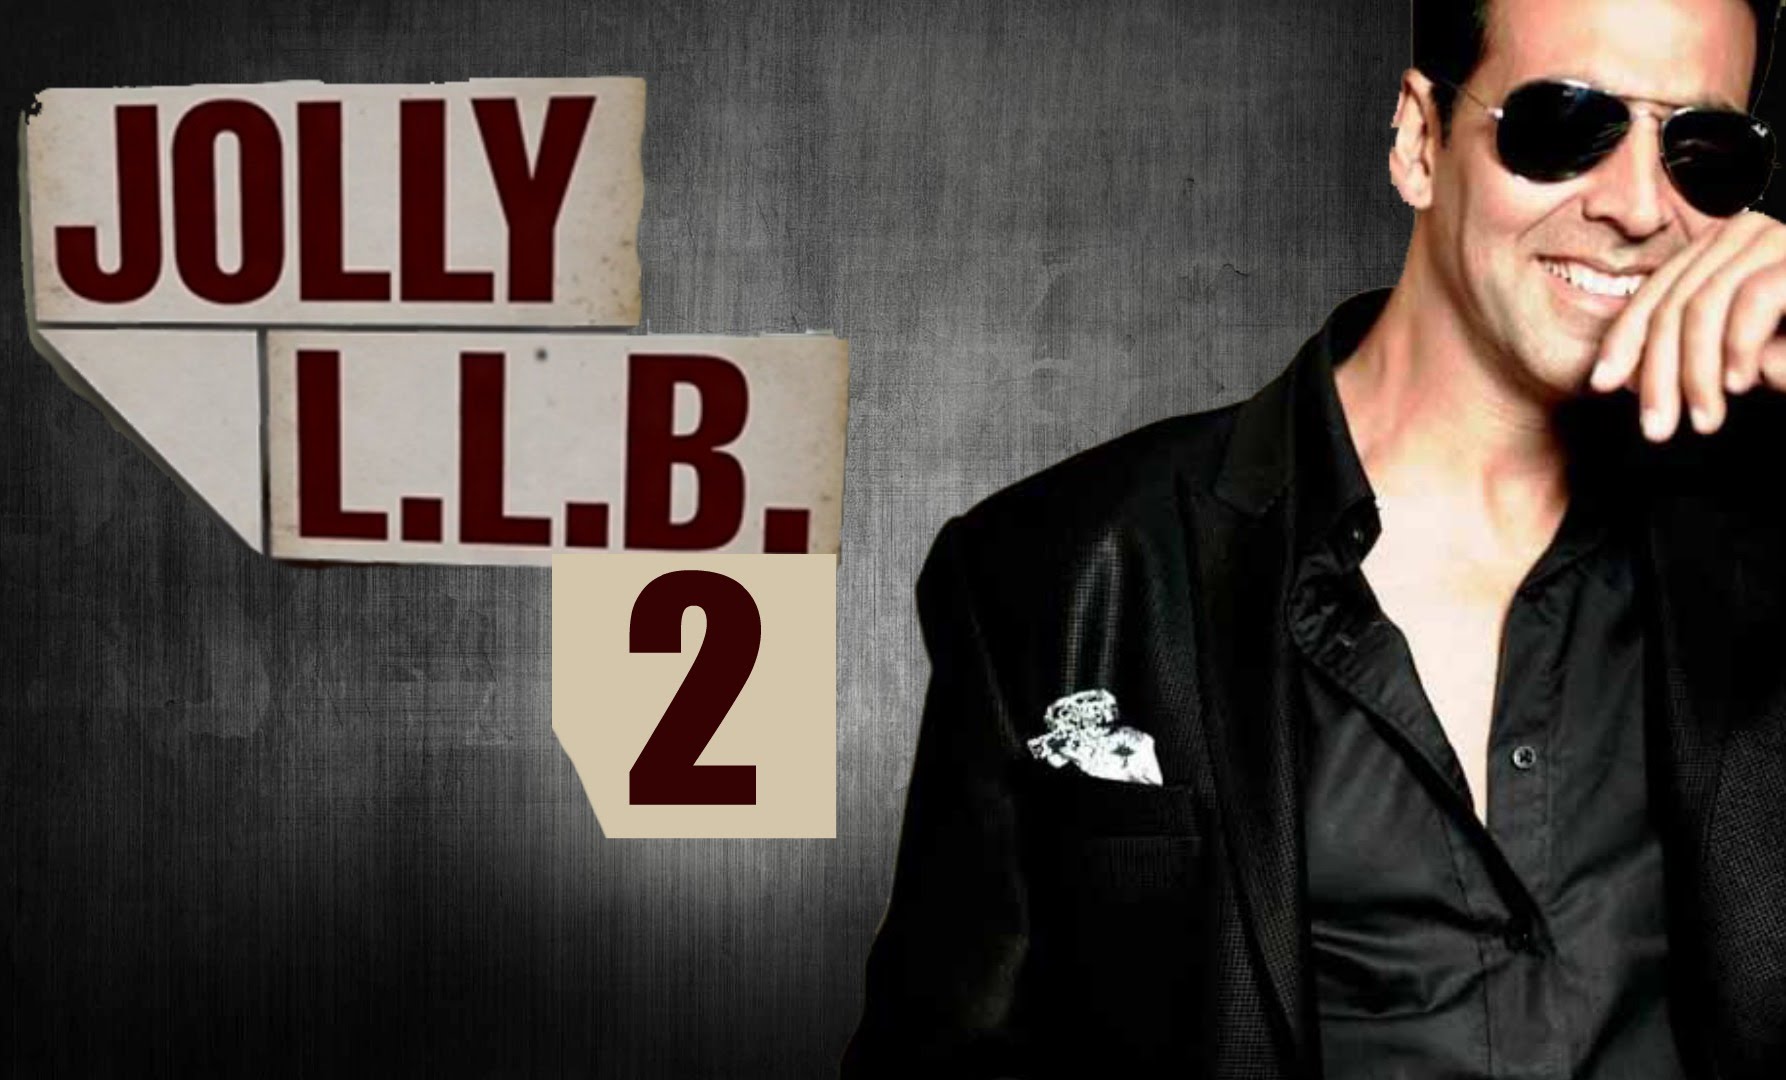 download jolly llb 2 movie